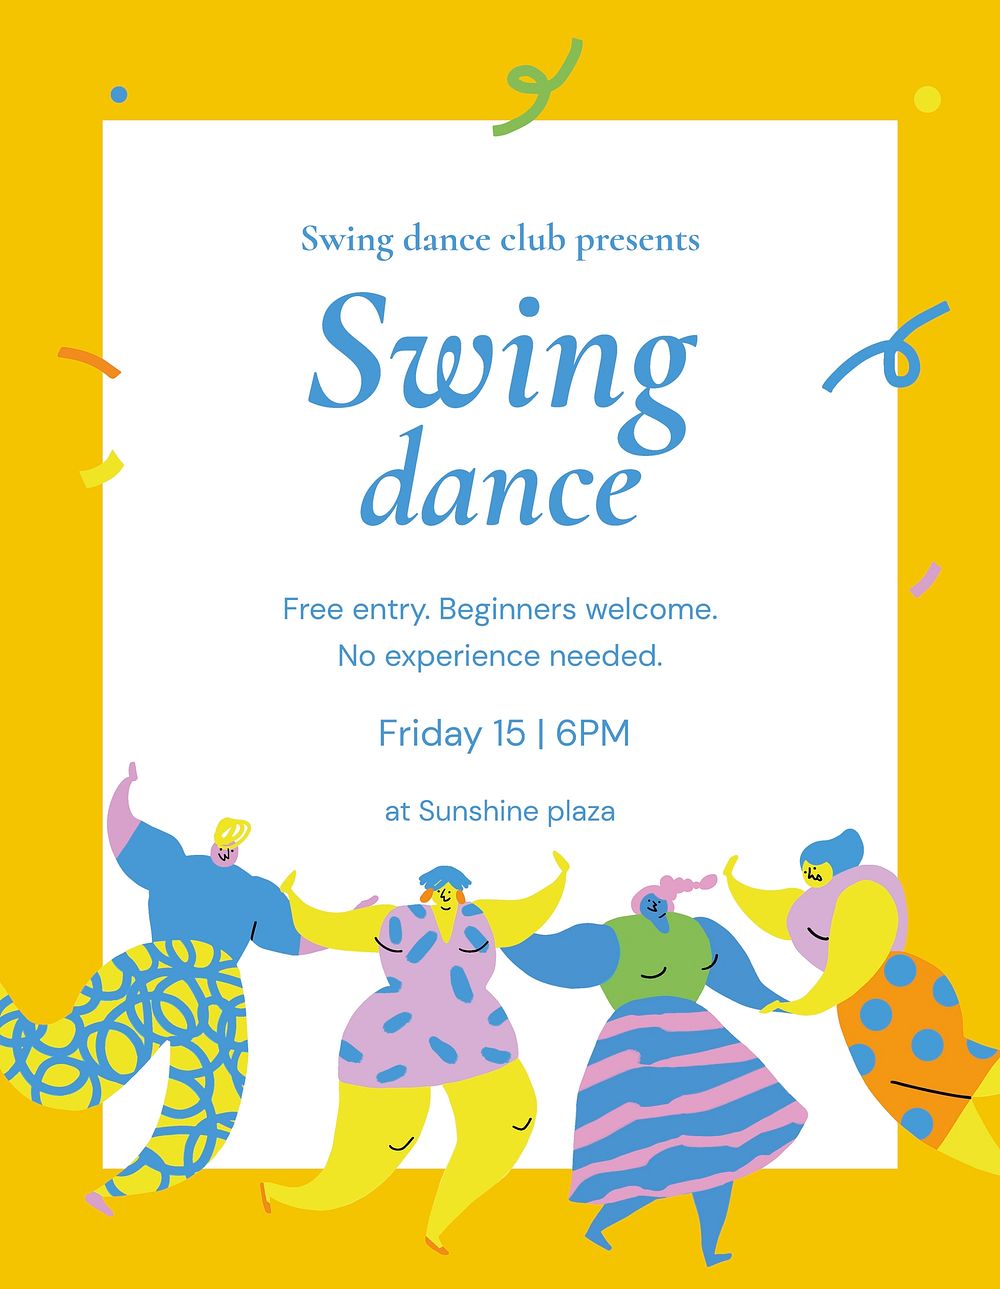 Swing dance template, event advertisement with cartoon vector